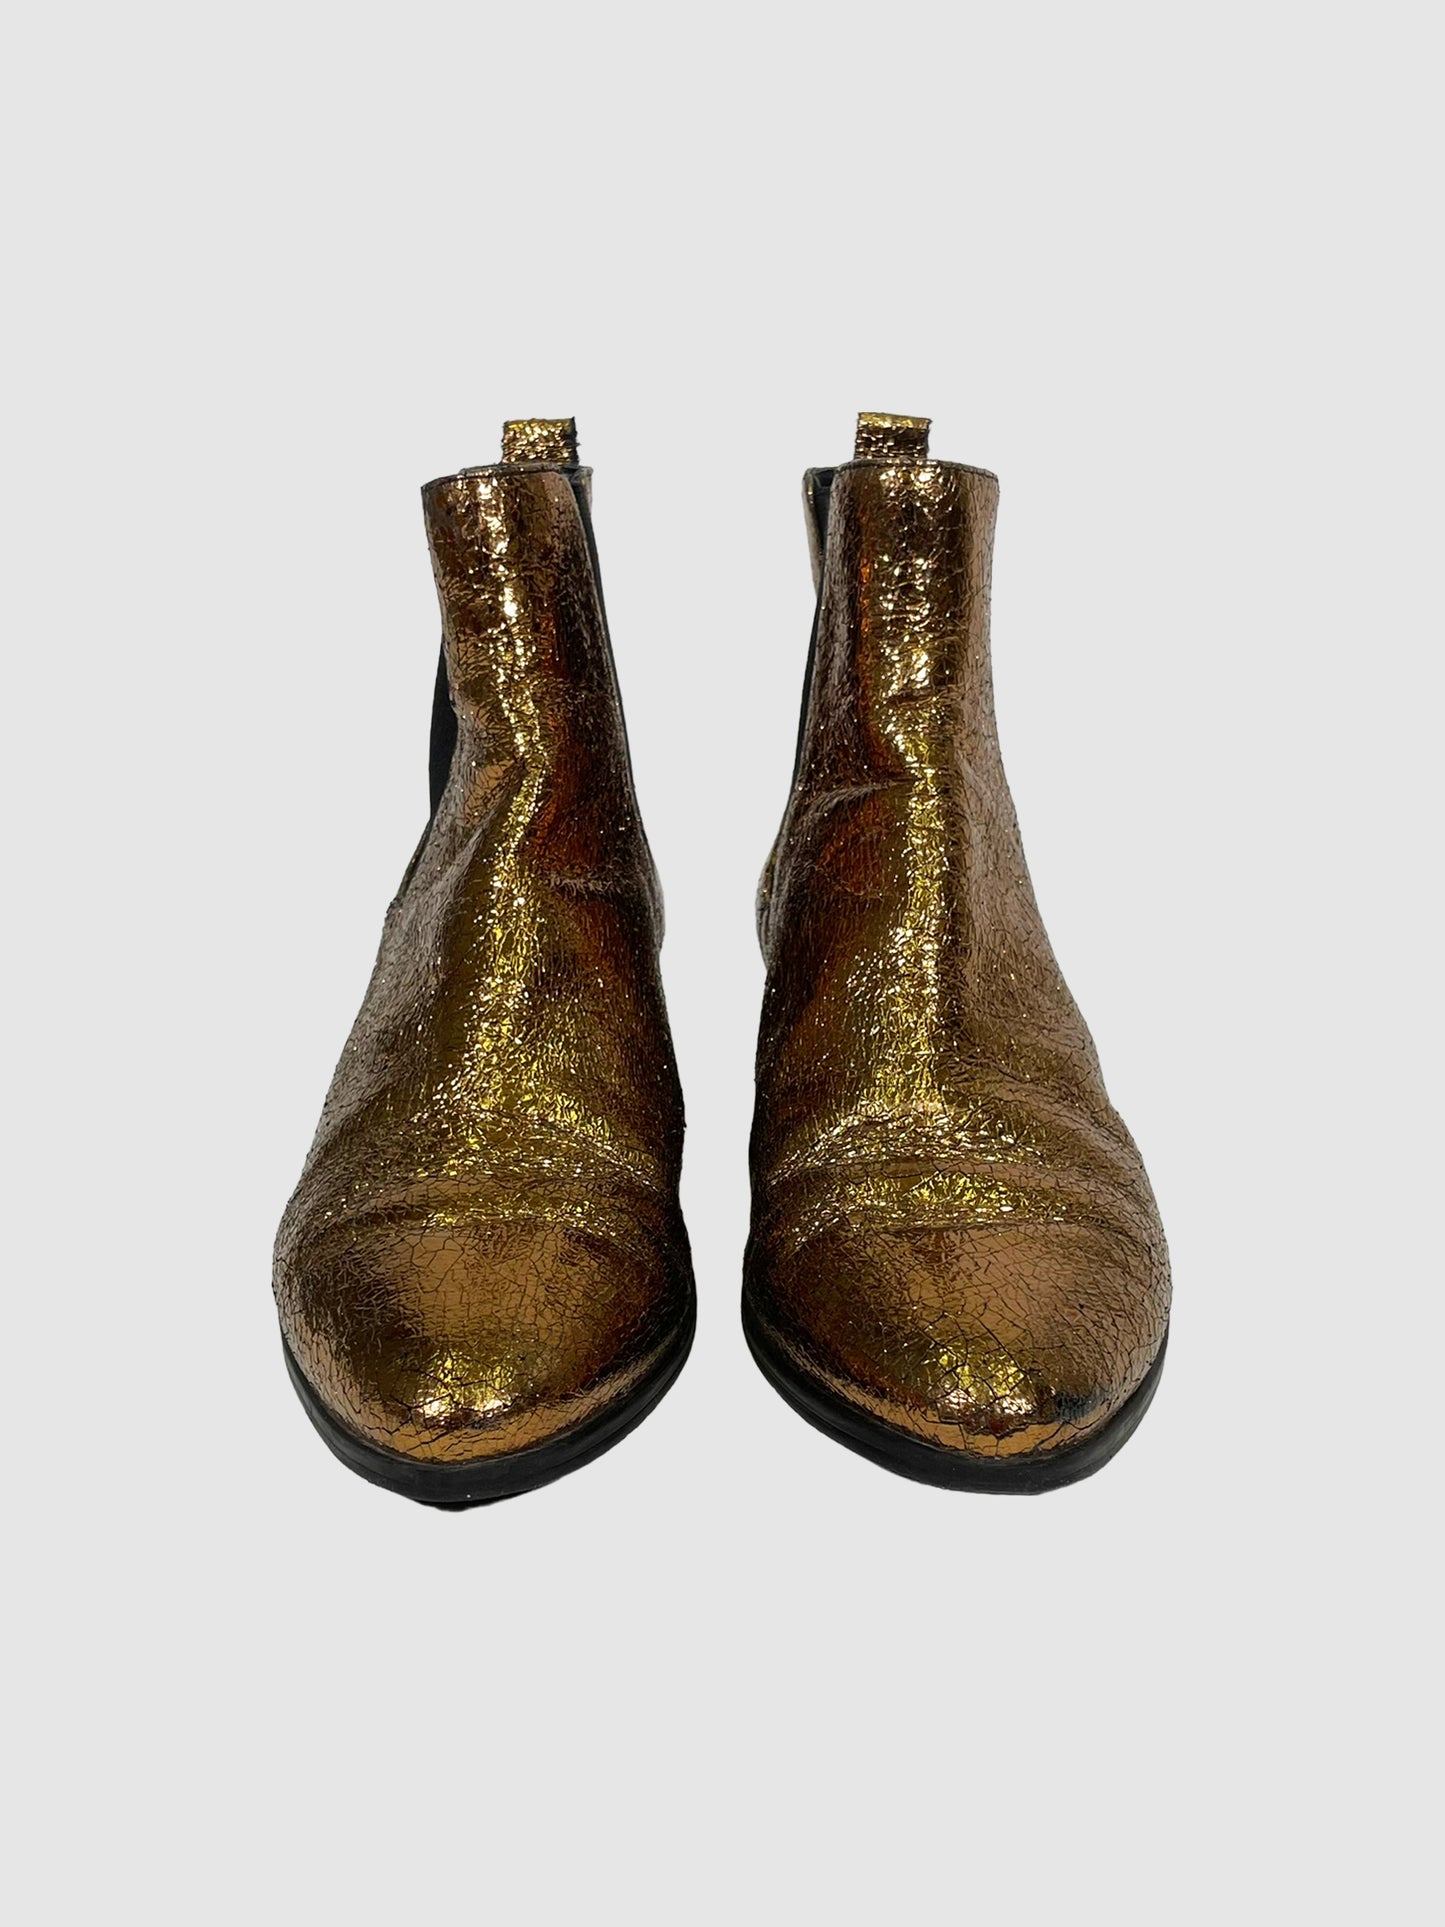 Schutz Metallic Chelsea Boots - Size 7.5